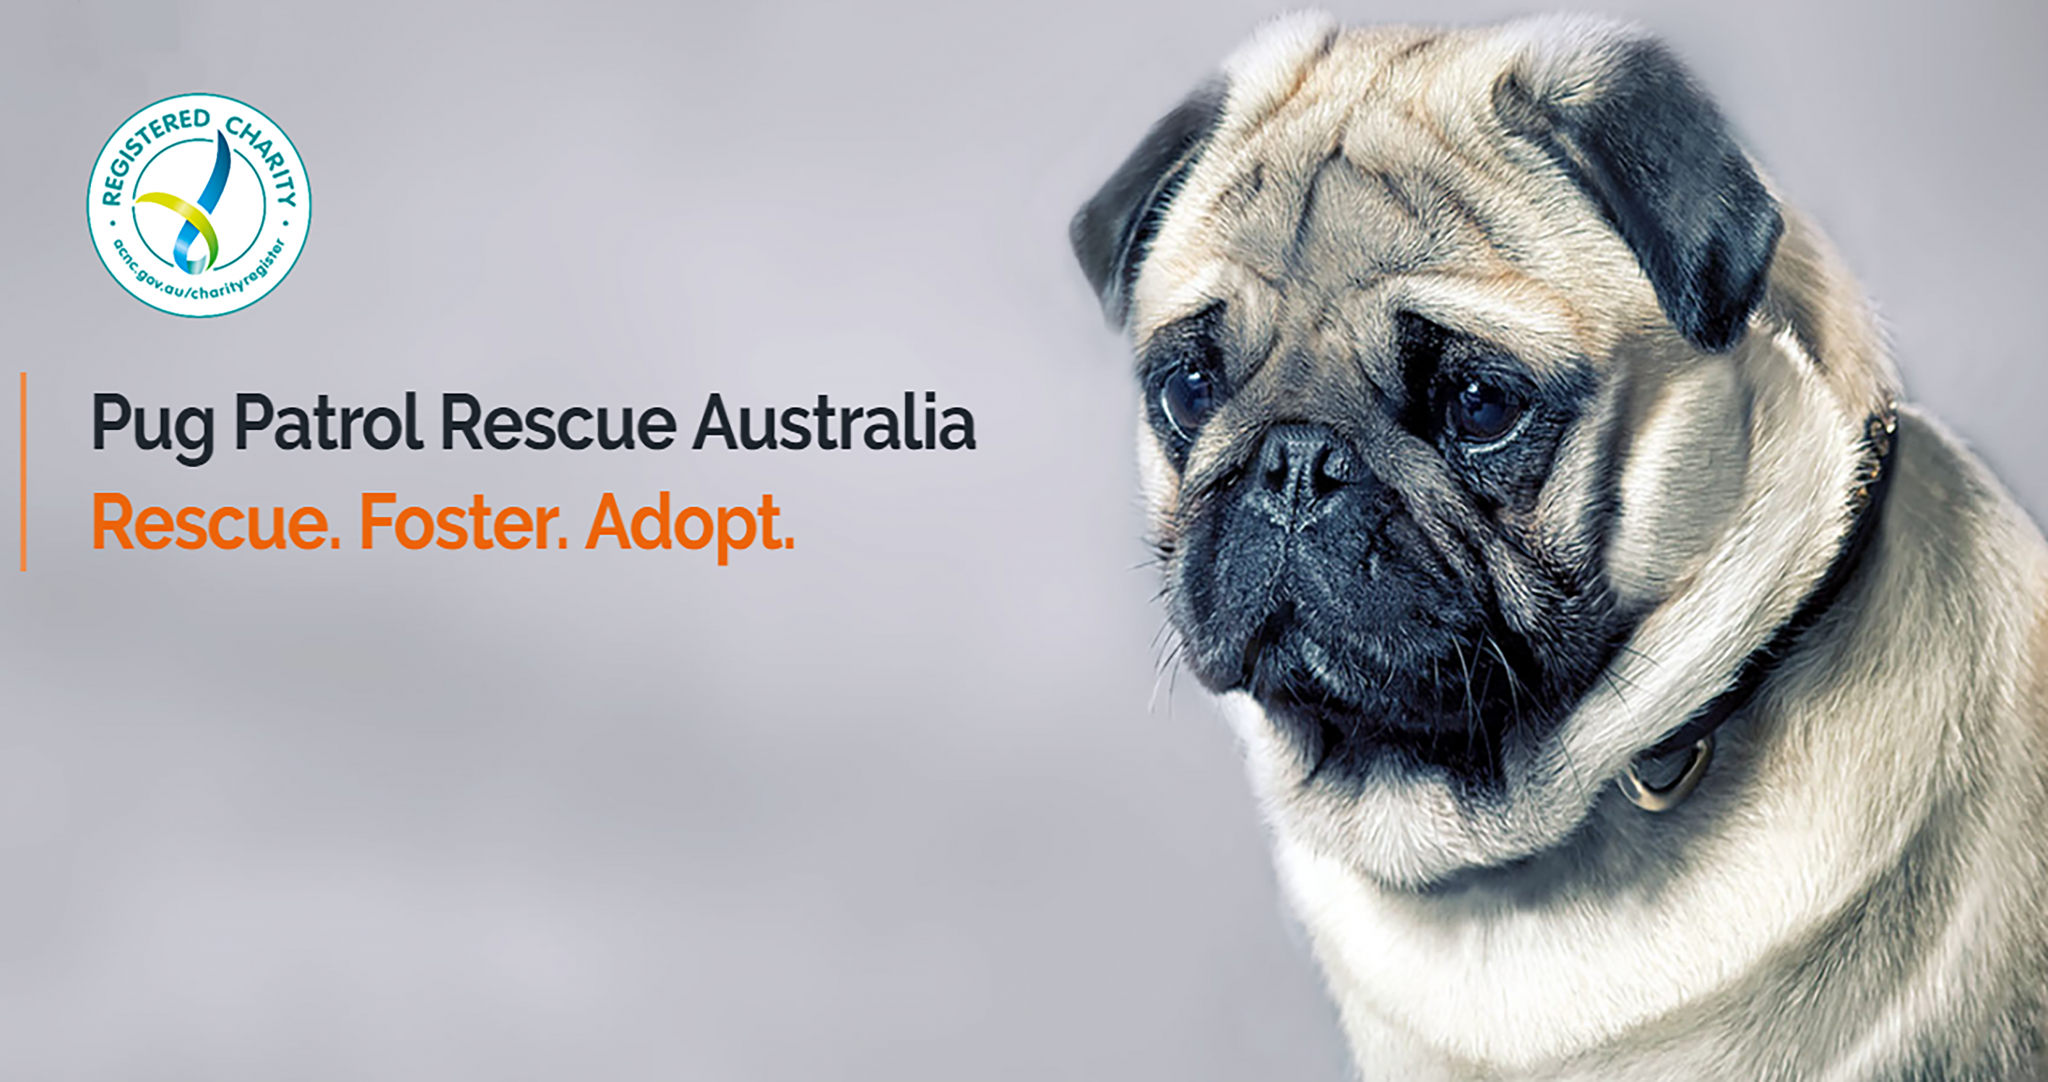 Pug Patrol Rescue Australia | www.pugpatrolrescueaustralia.com.au